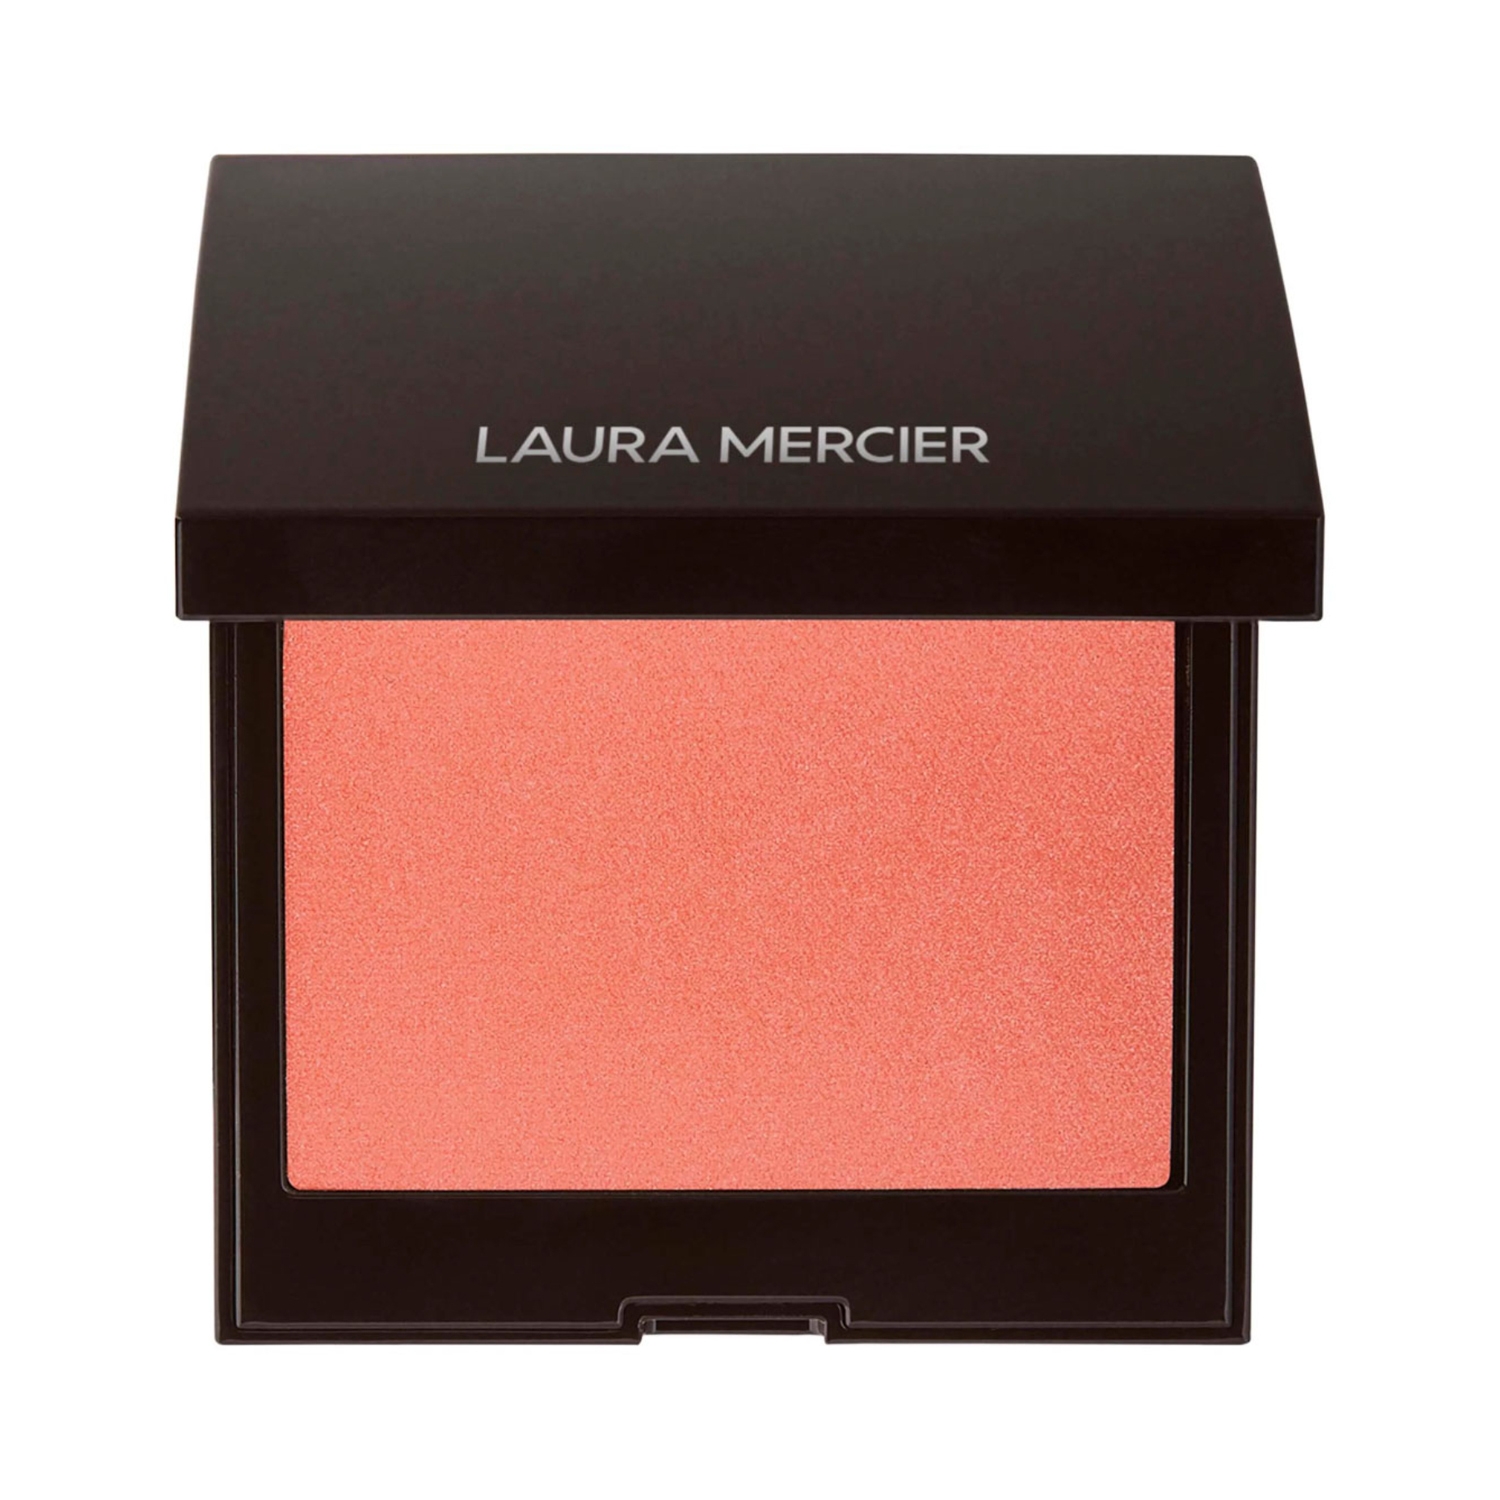 Laura Mercier | Laura Mercier Blush Color Infusion - Peach (6g)